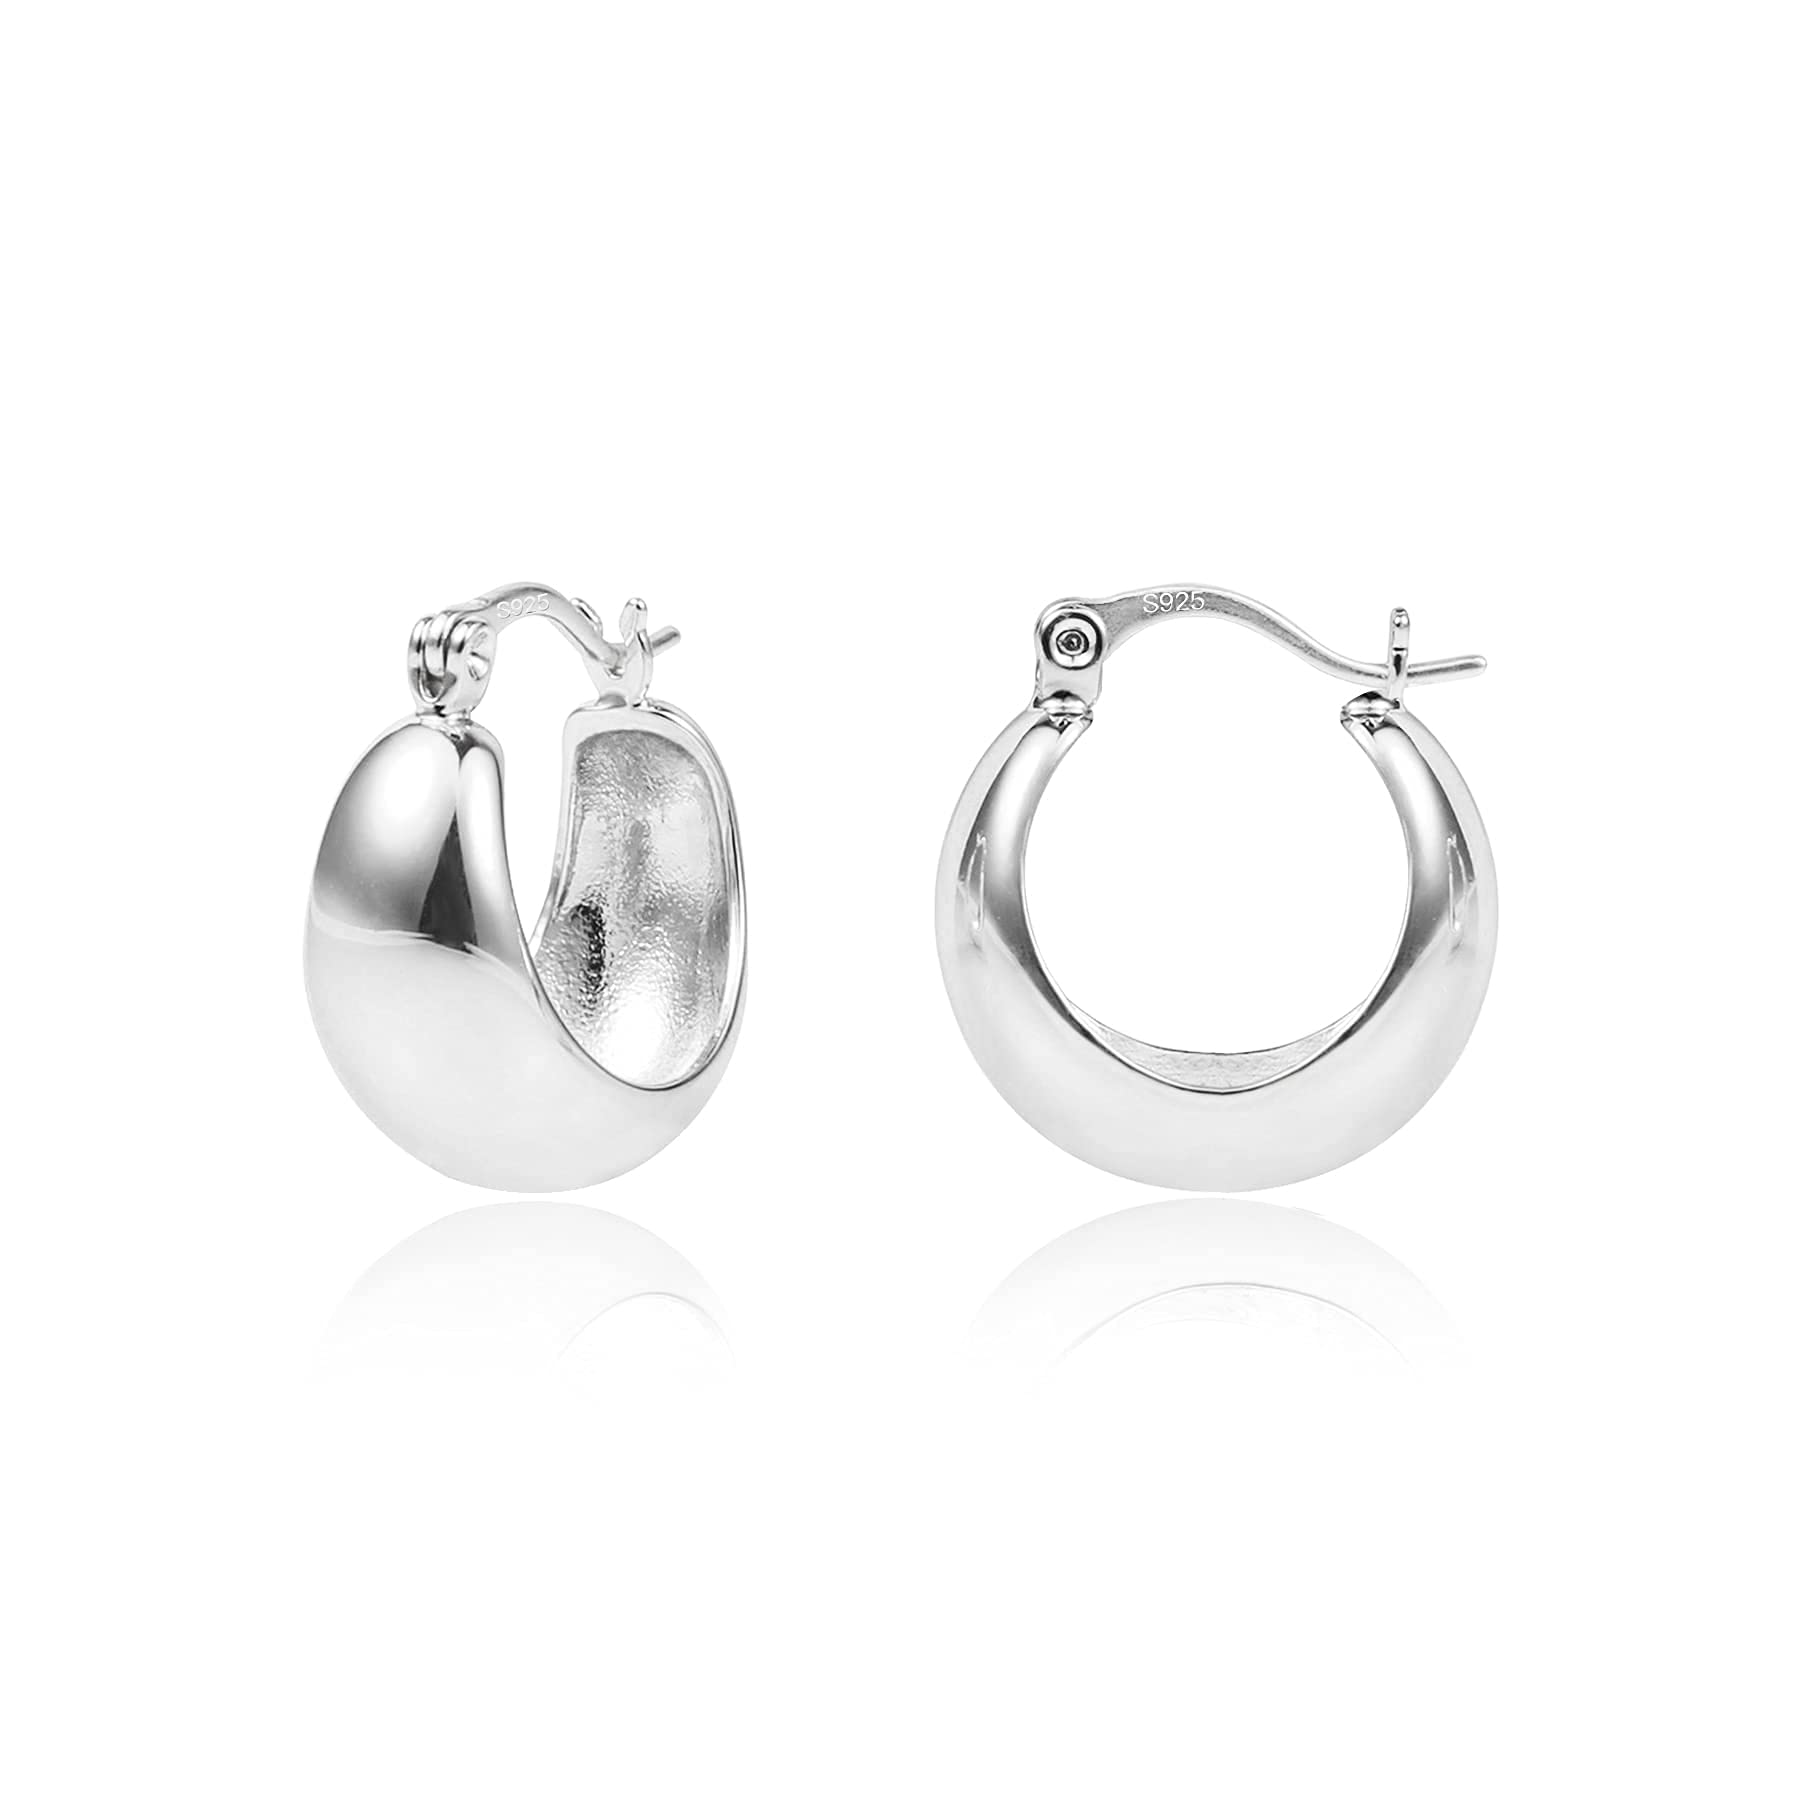 KISSPAT chunky Silver Huggie Hoop Earrings for Women girls  Hypoallergenic Sterling Silver Post Small Thick Huggie Earring Hoops